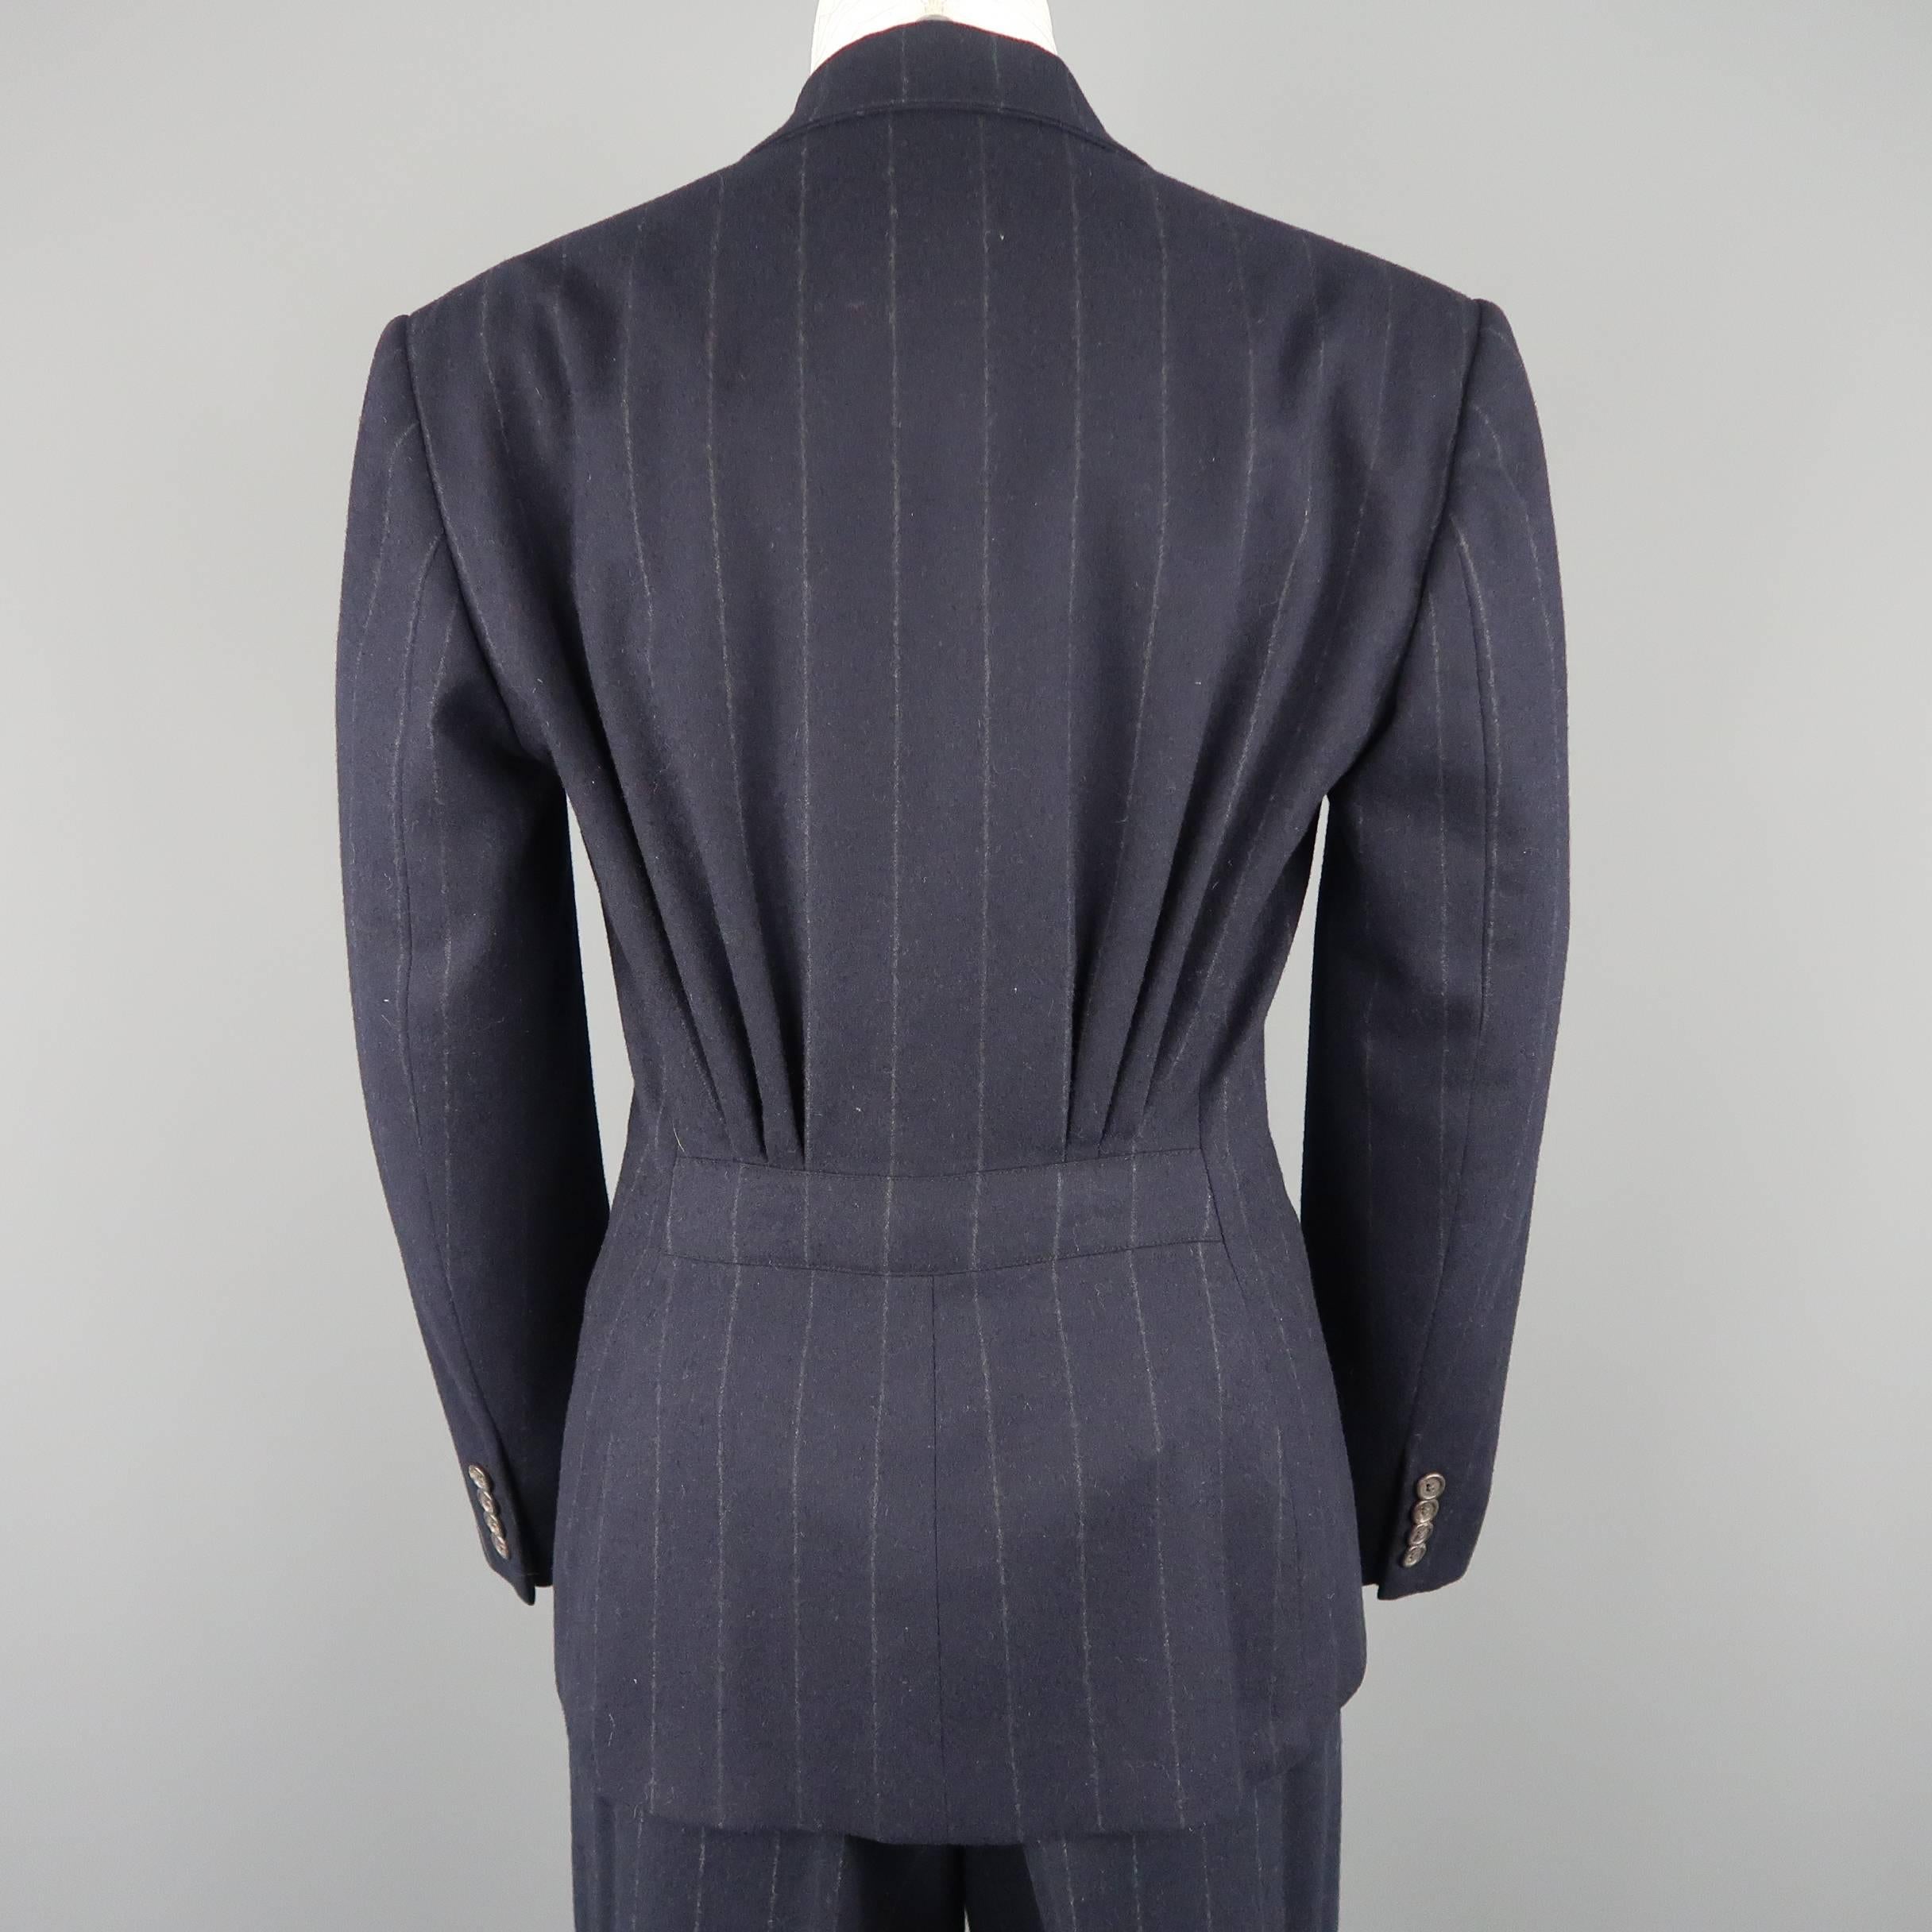 Women's Ralph Lauren Navy Chalkstripe Wool Pleated Peak Lapel Jacket Pants Suit